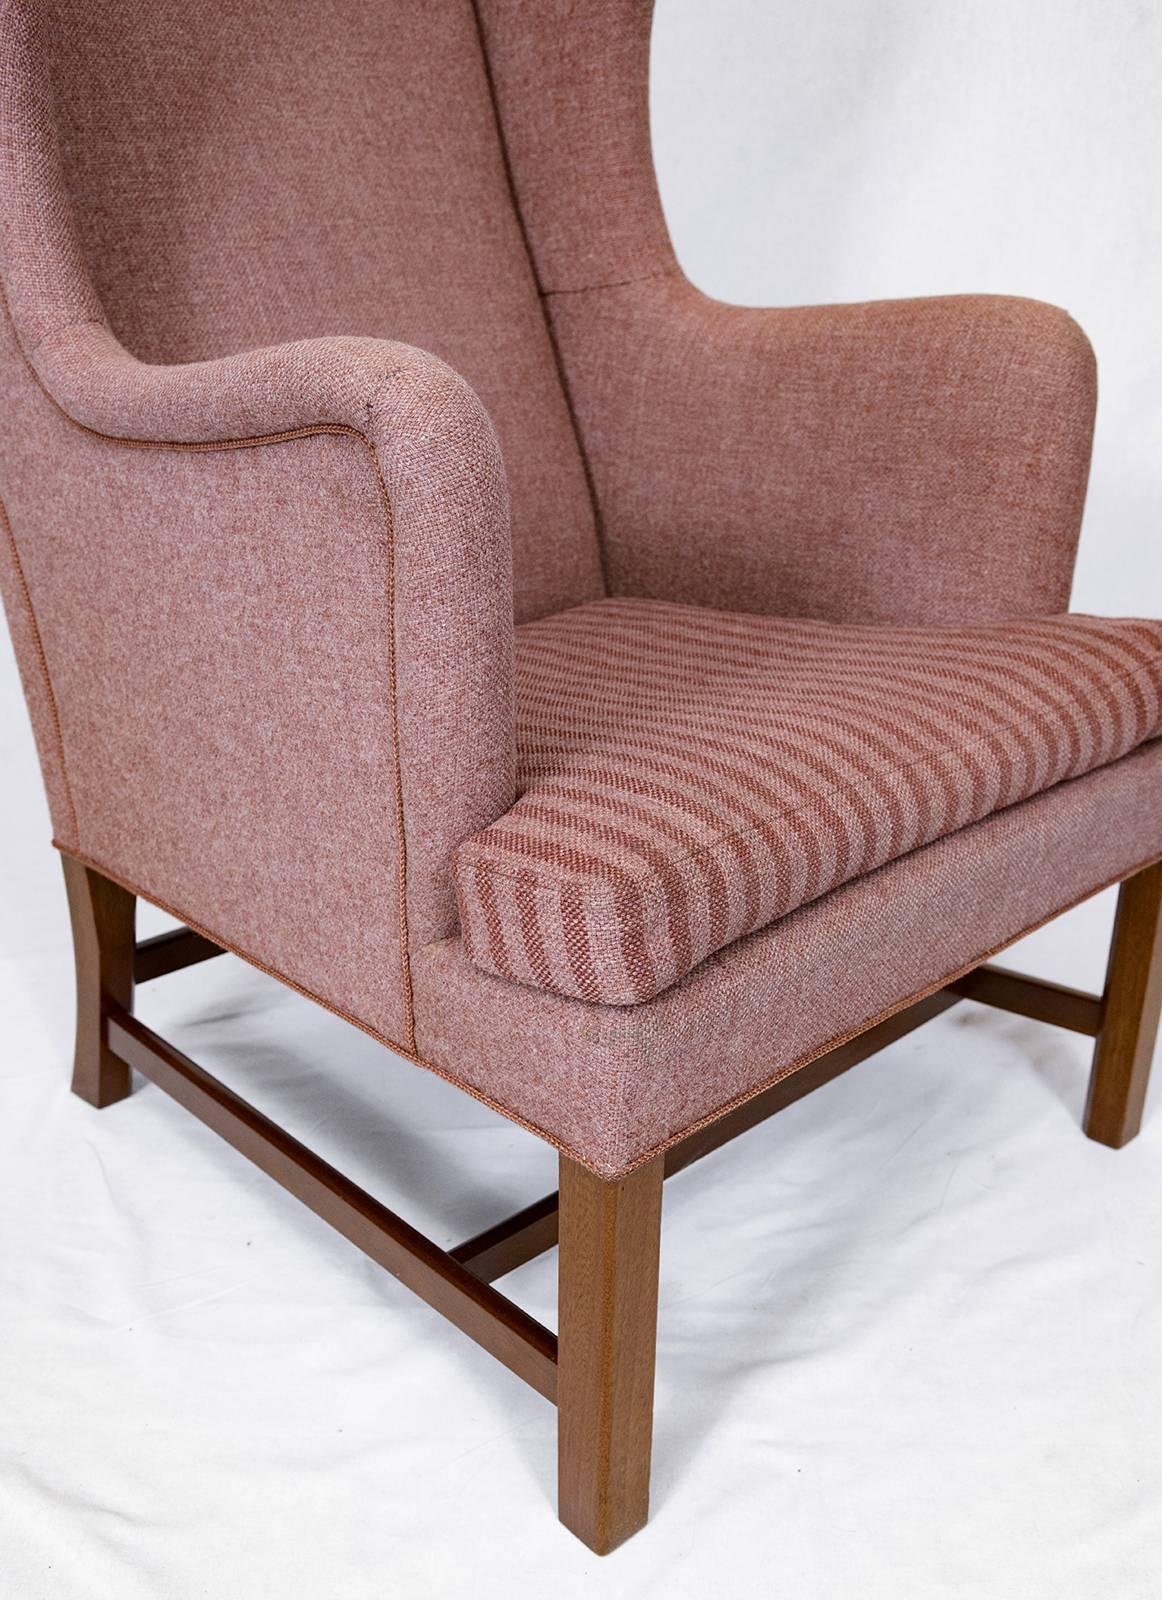 Fabric Kaare Klint Wingback Chair